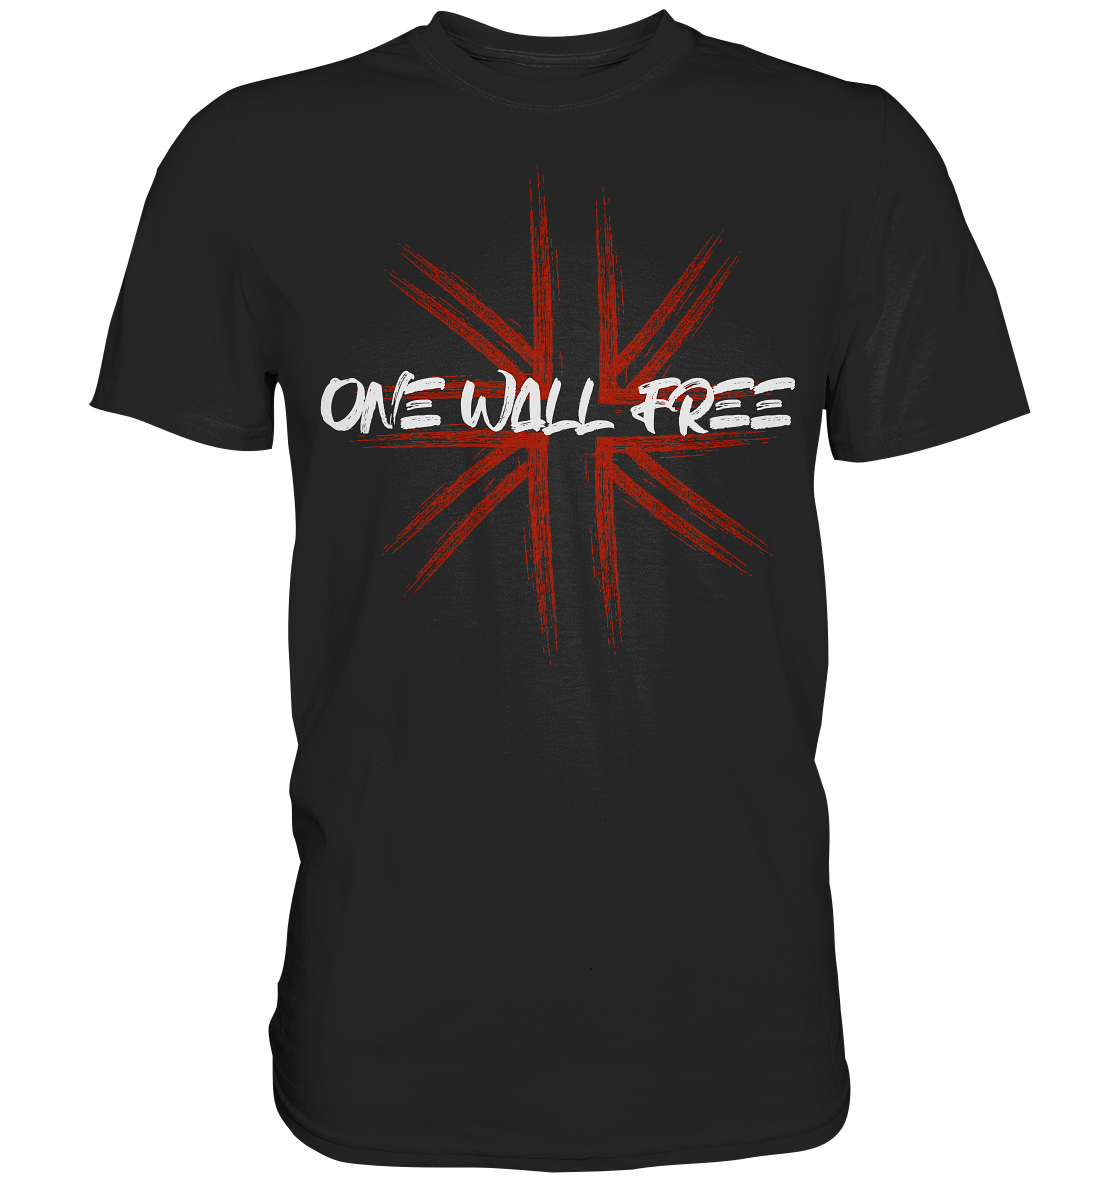 "One Wall free" - Premium Shirt